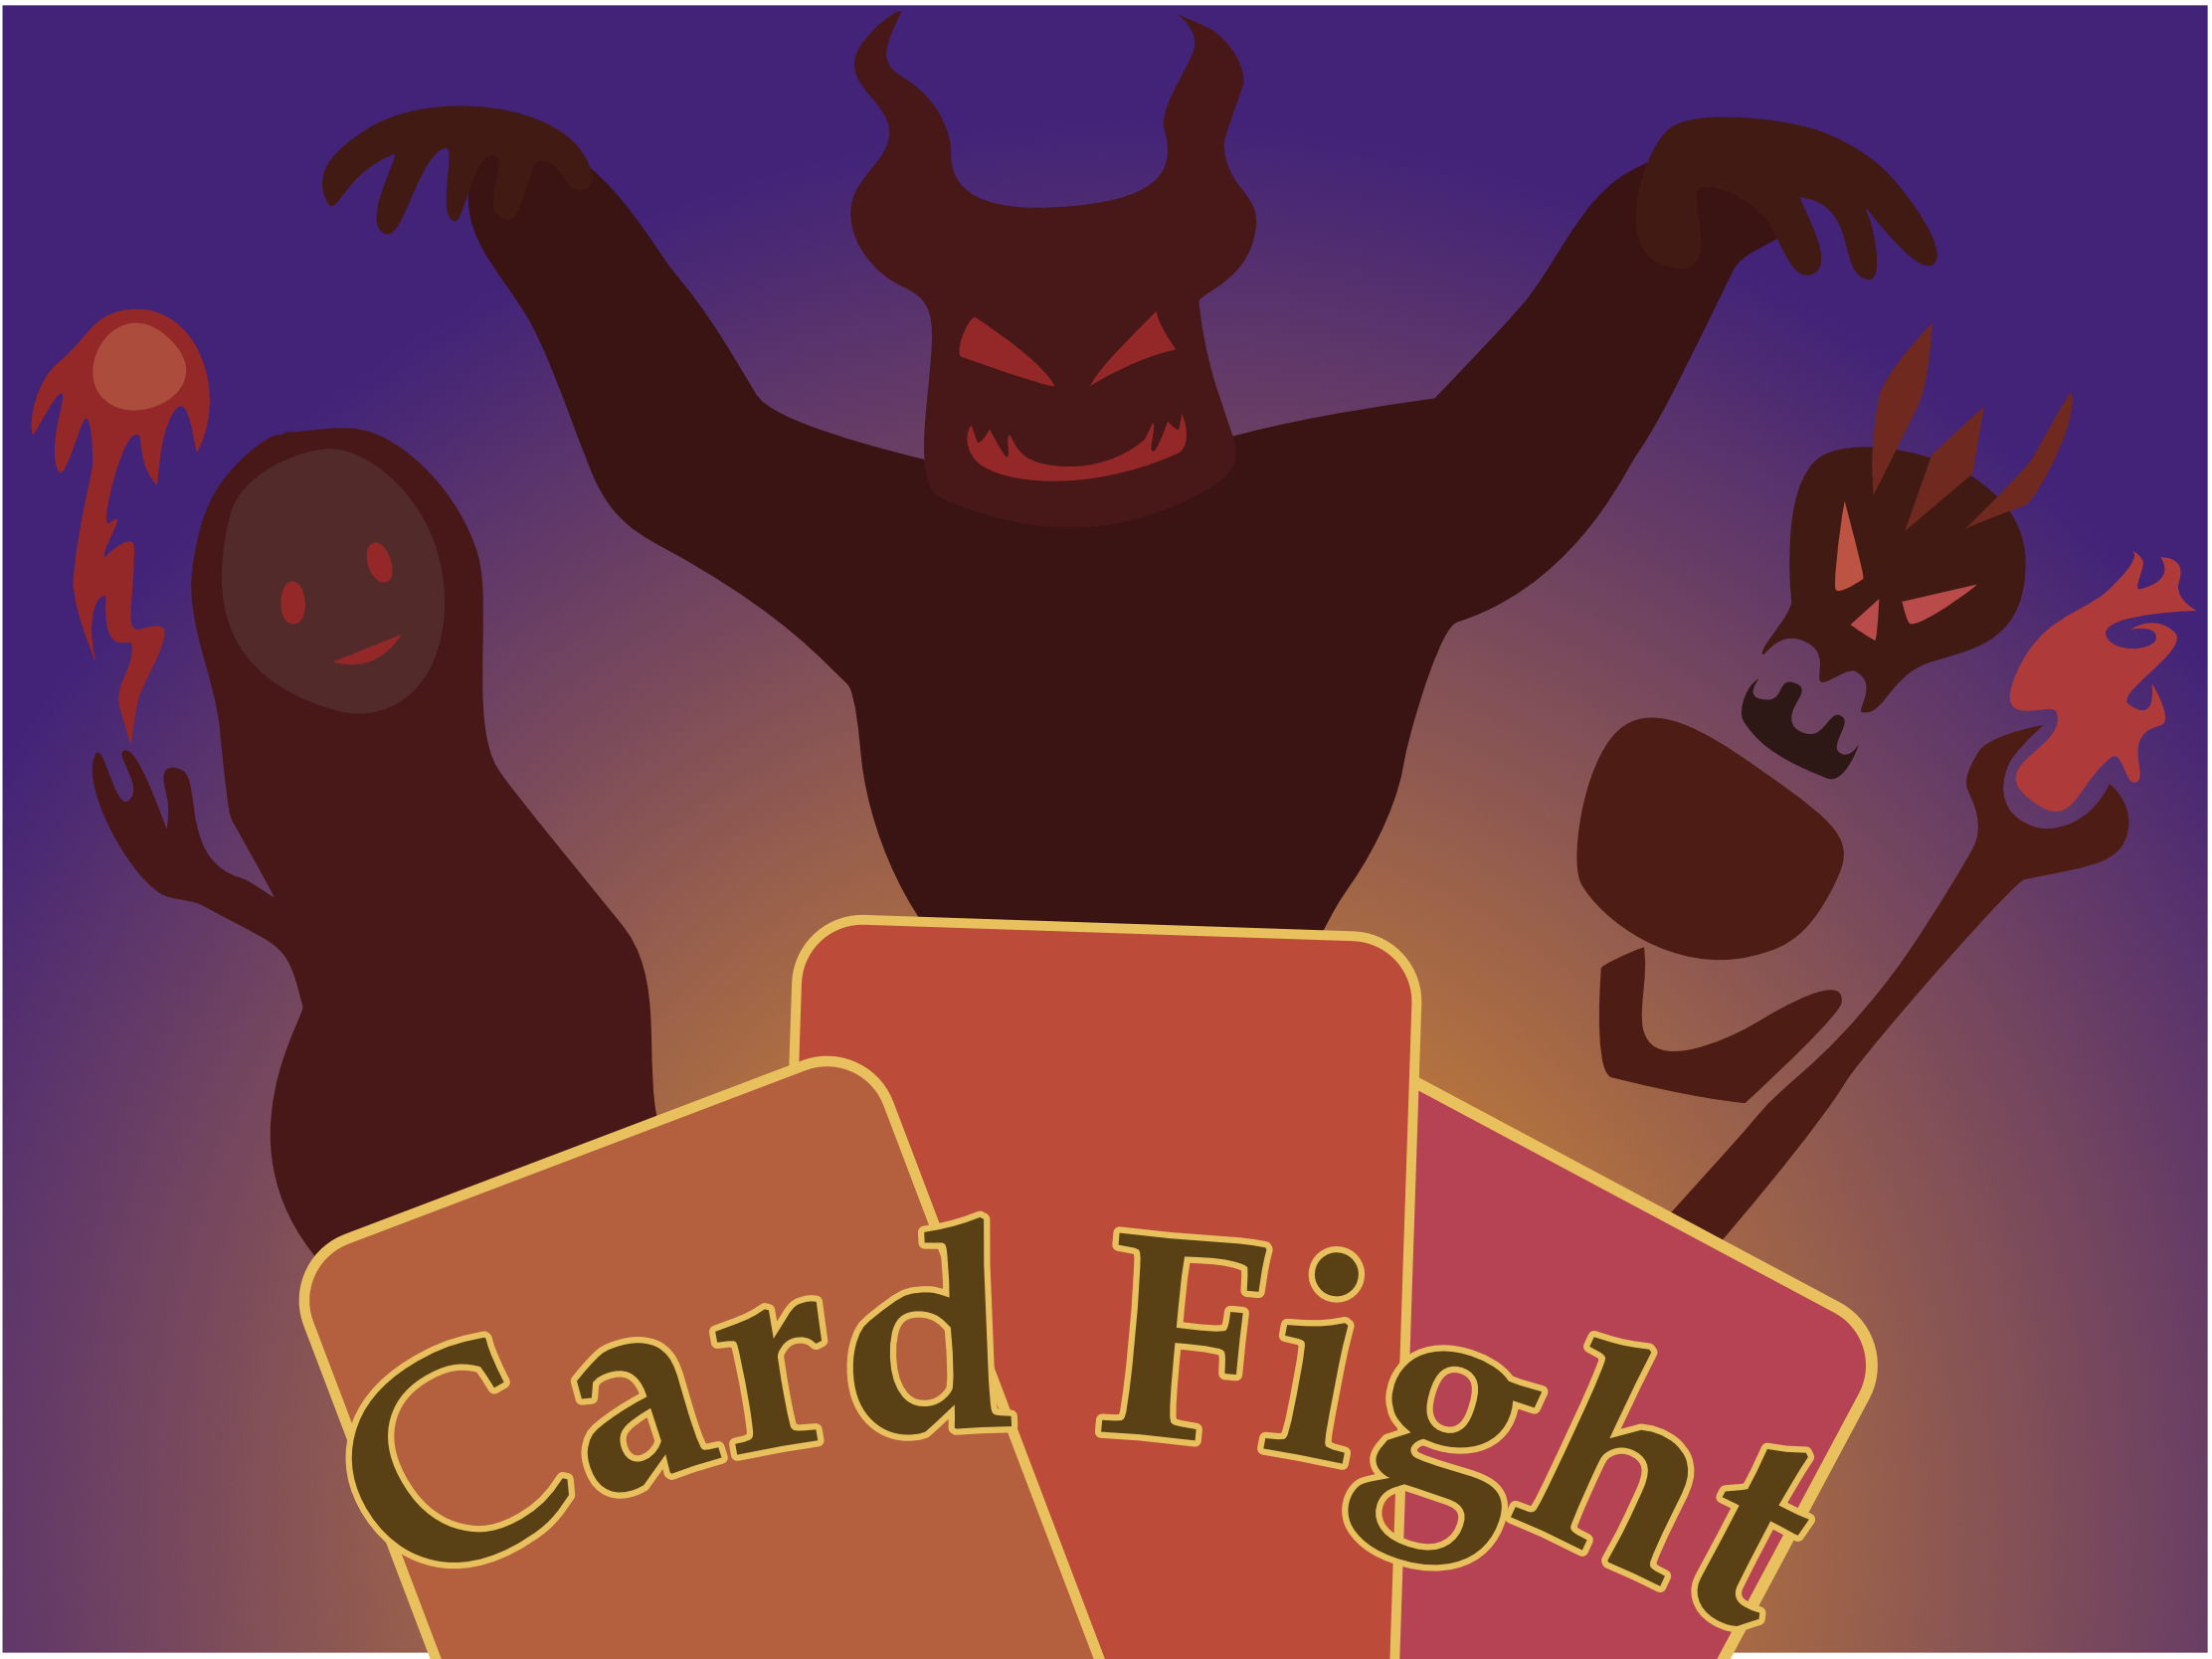 CardFight